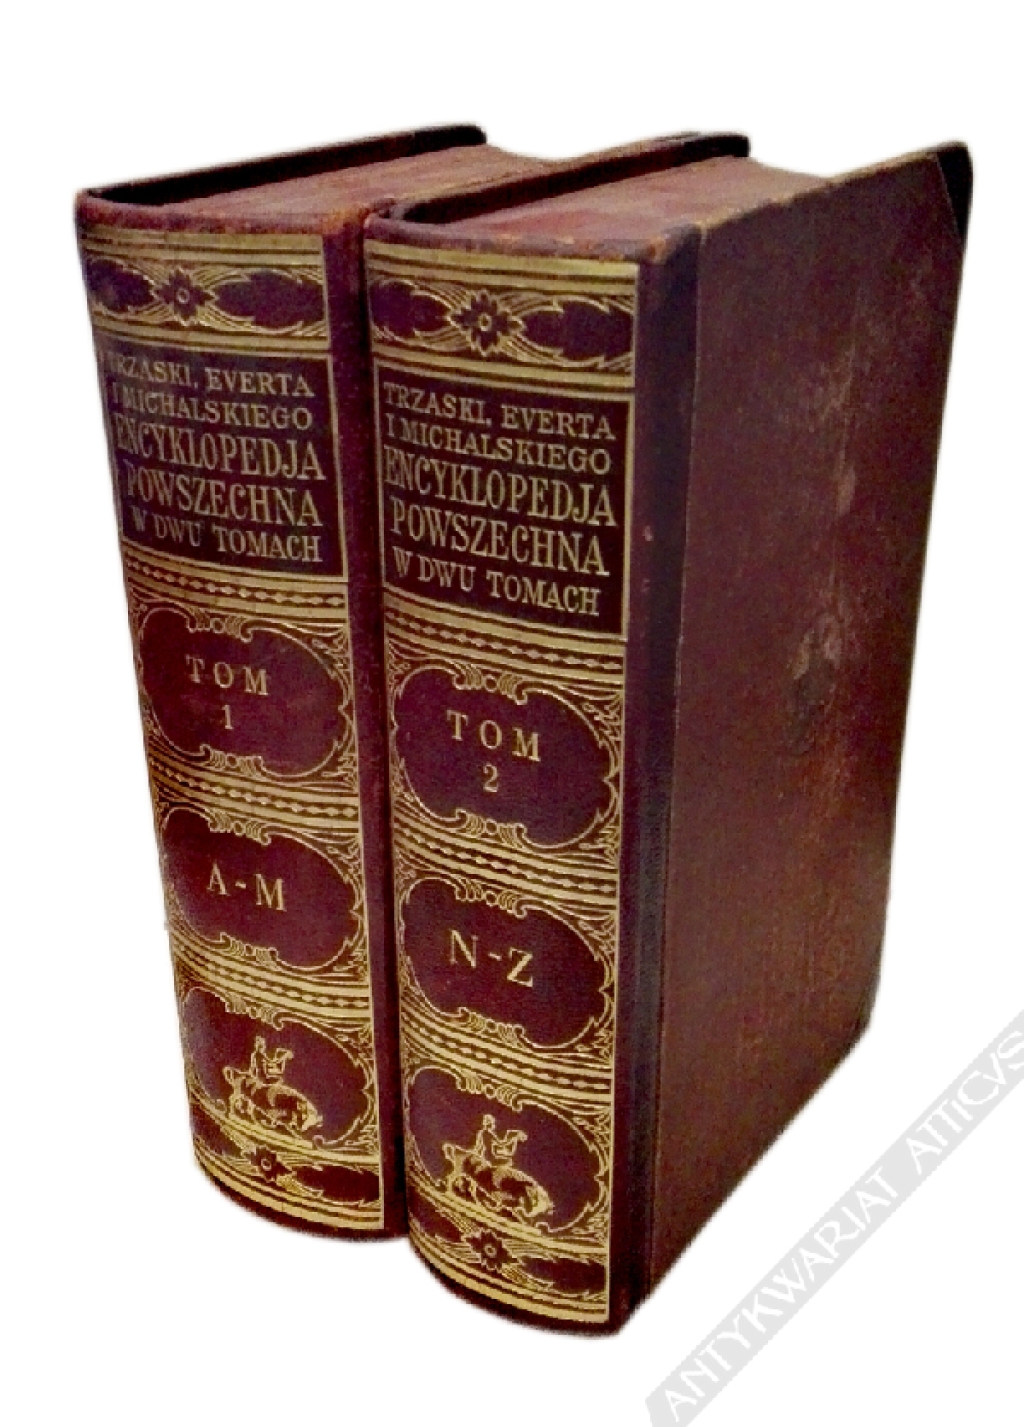 Encyklopedja powszechna w dwu tomach, t. I-II [2 woluminy]